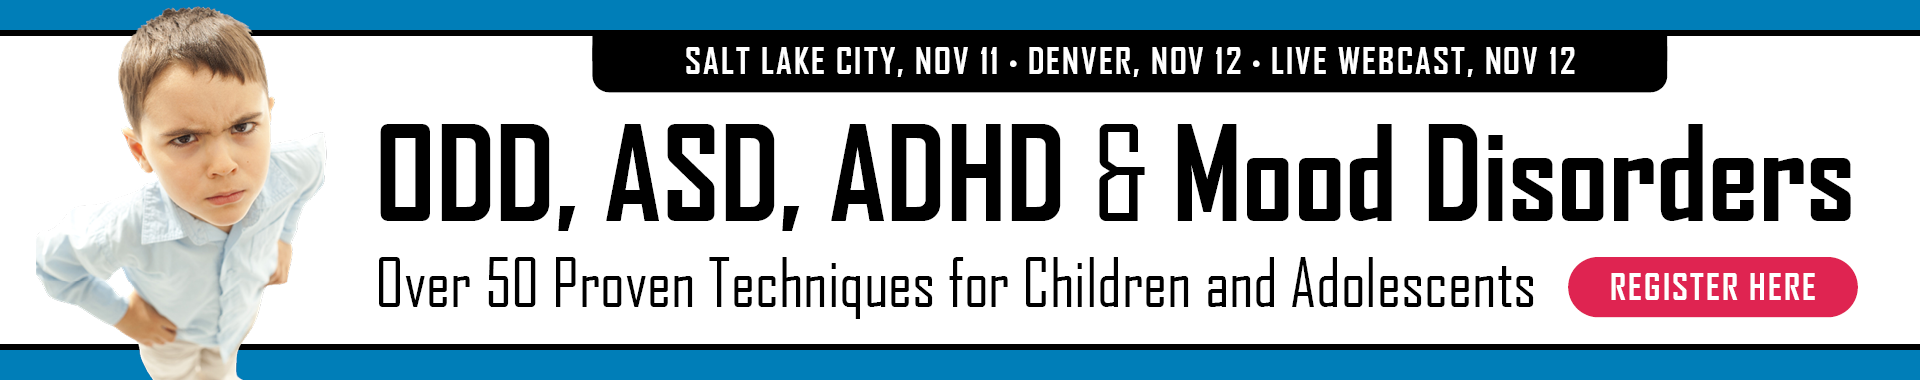 ODD, ASD, ADHD & Mood Disorders: Over 50 Techniques for Children & Adolescents